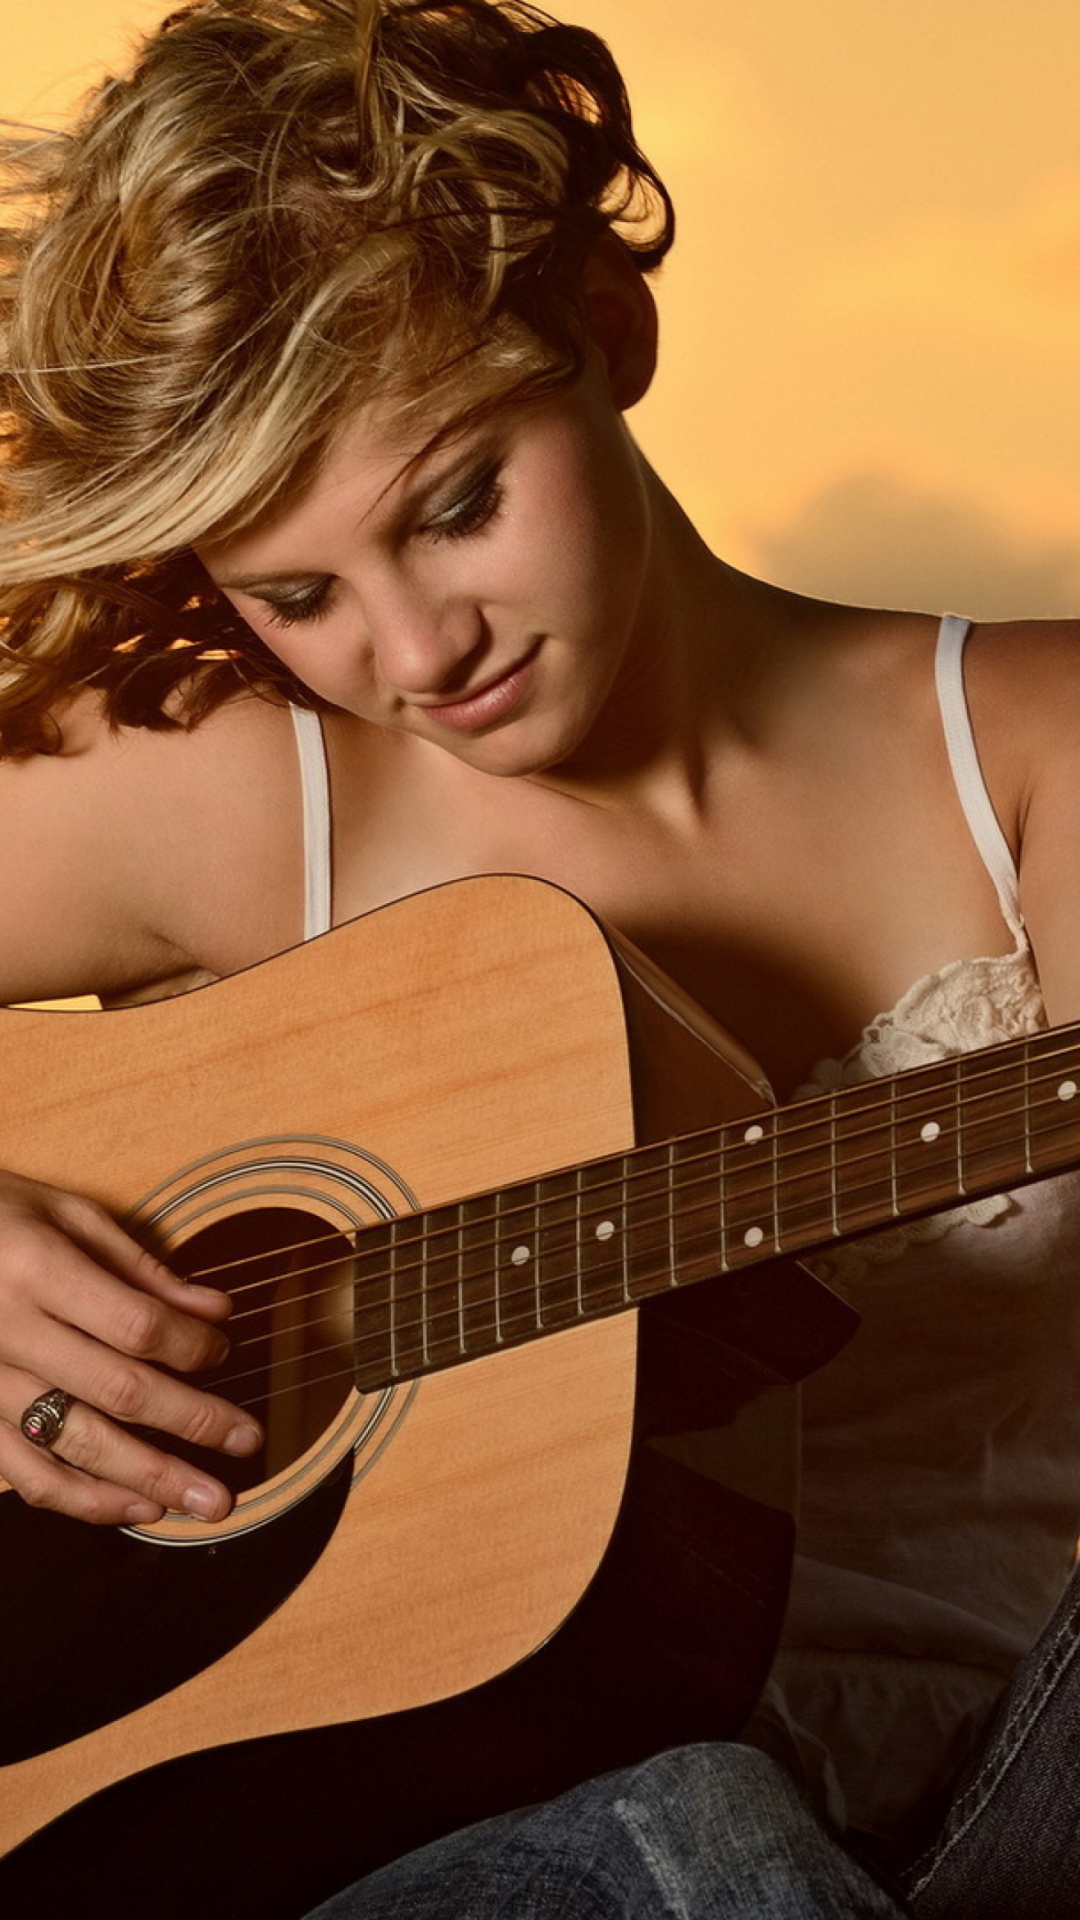 Girl Playing Guitar wallpaper 1080x1920